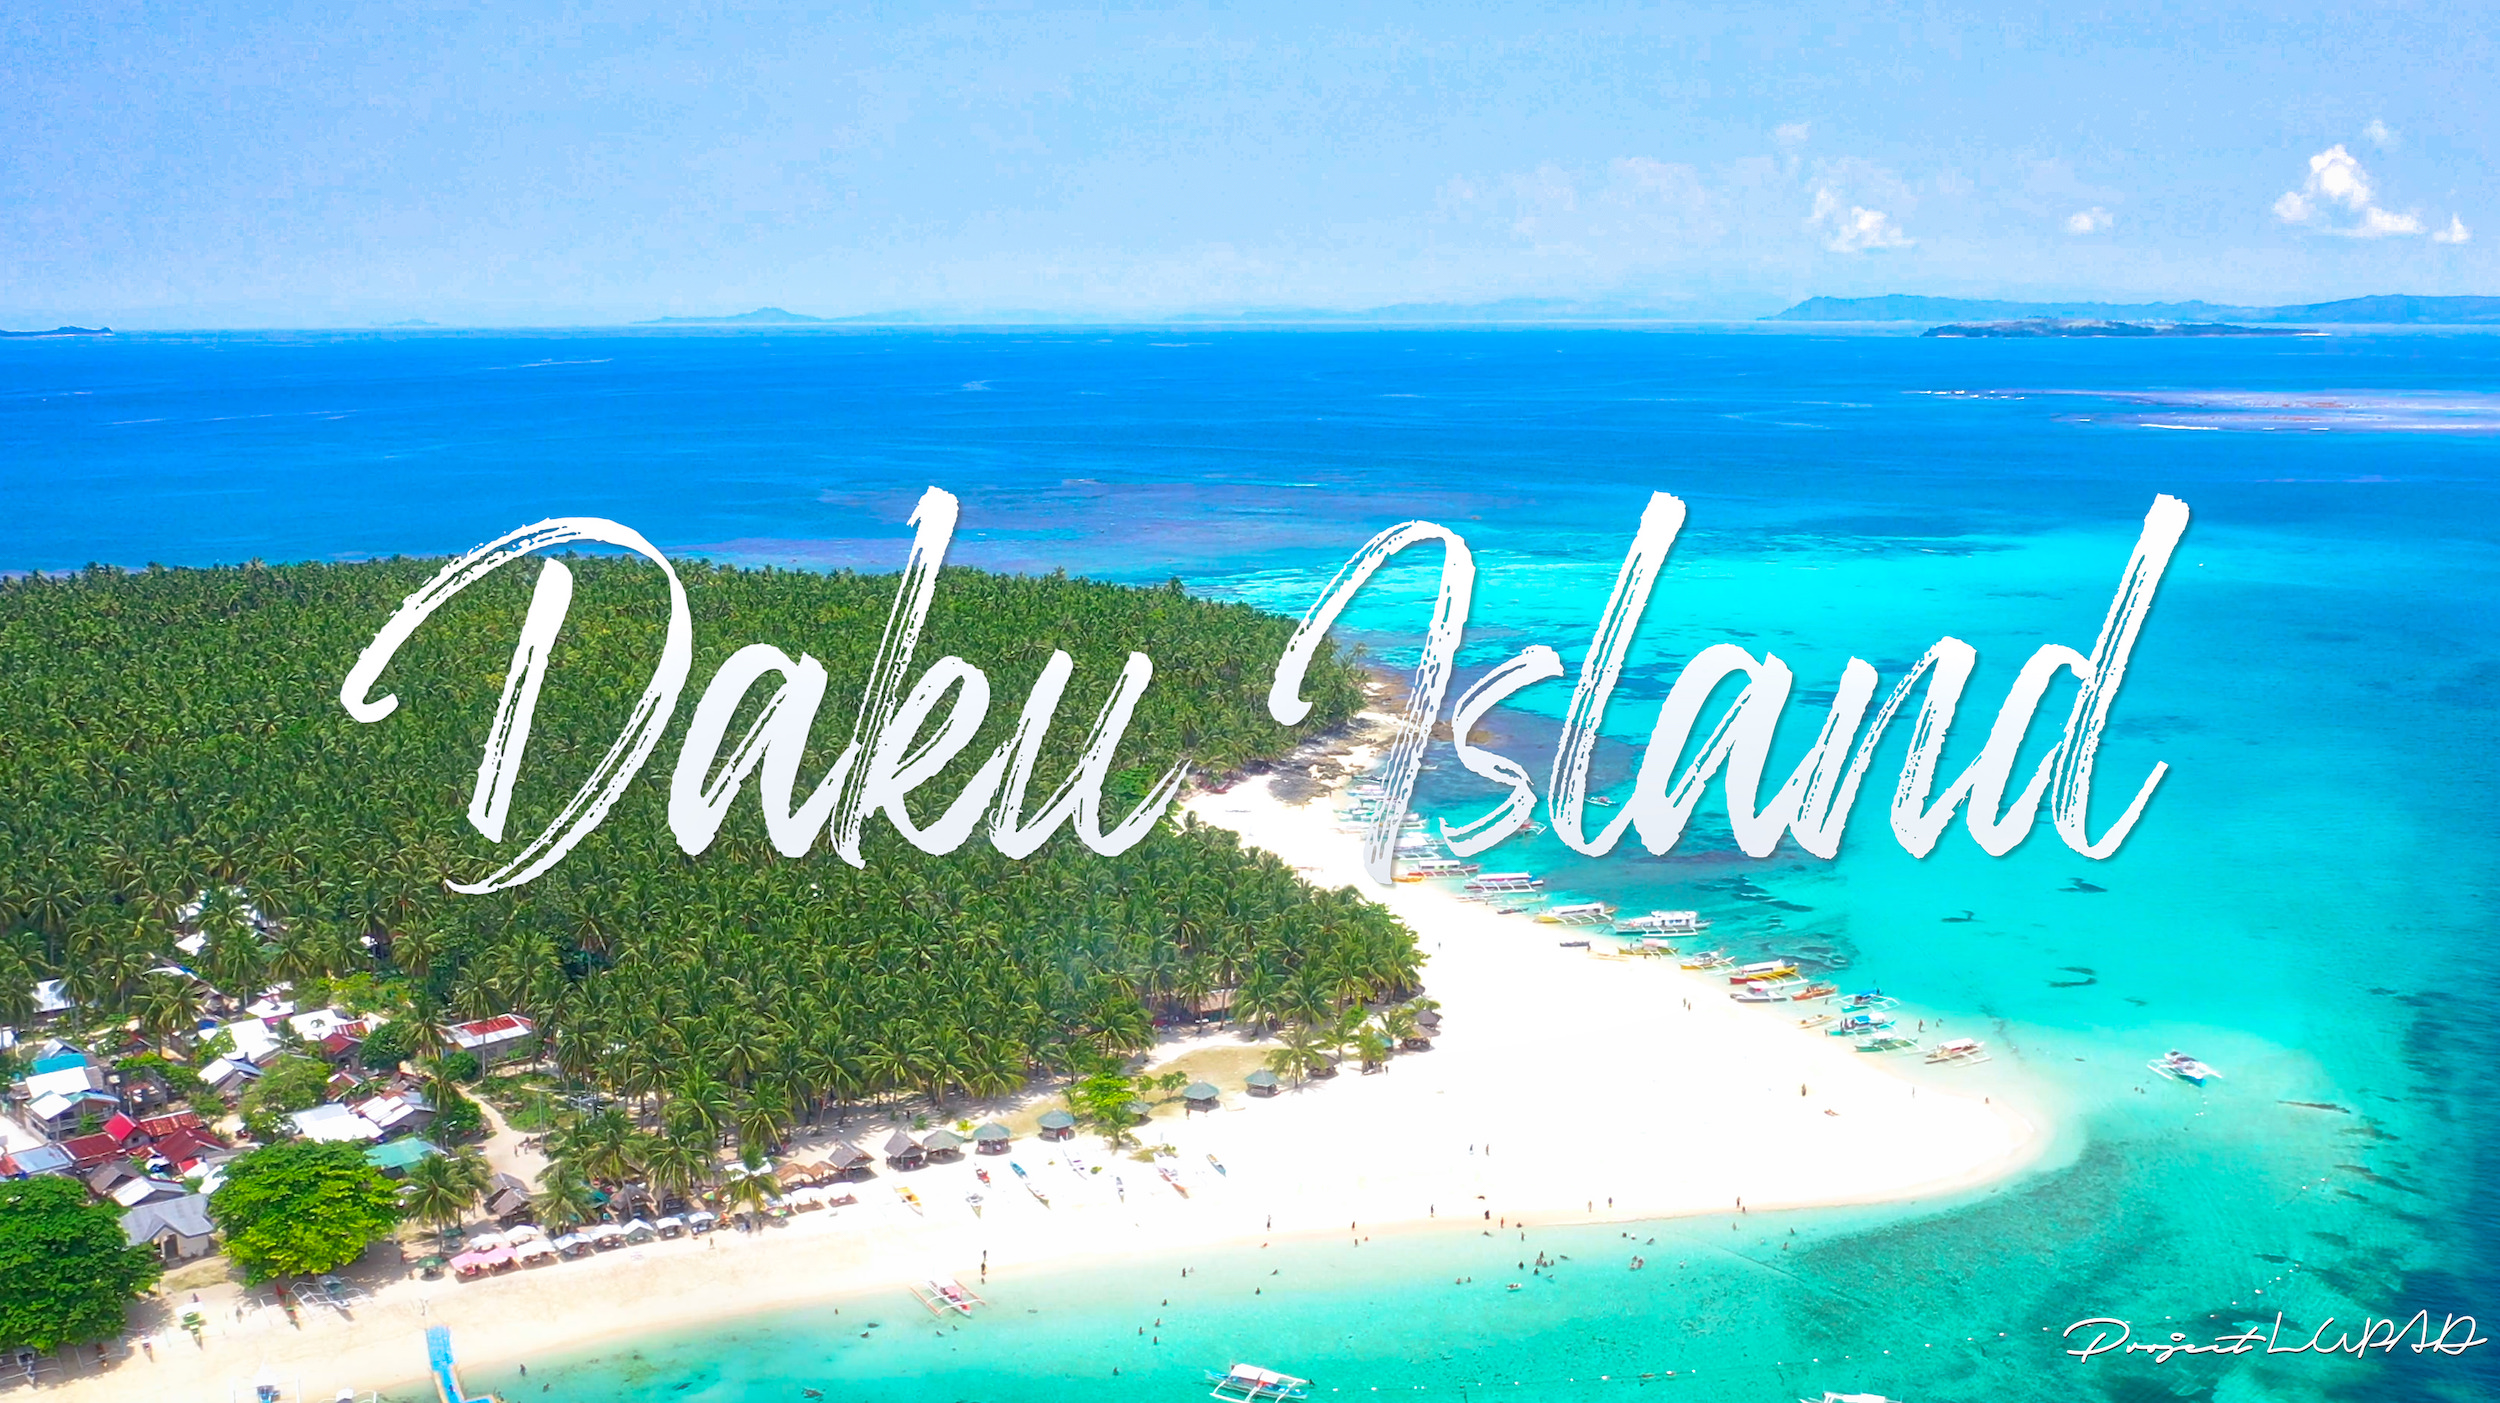 Daku Island Siargao - A reliable travel guide - Daily 